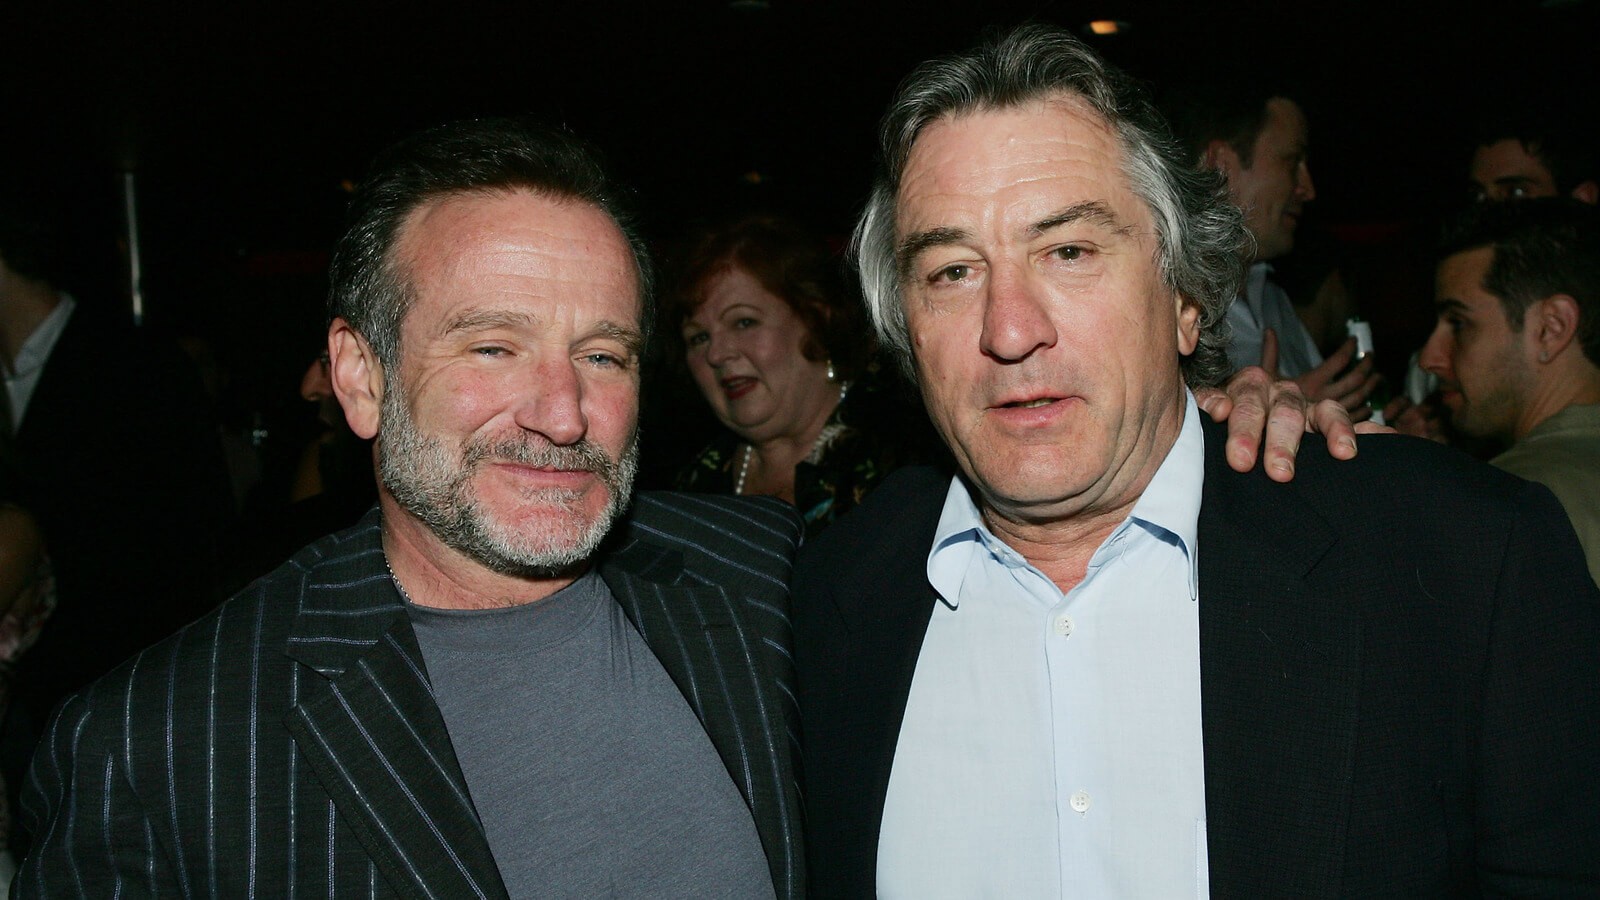 De Niro and Williams were good friends